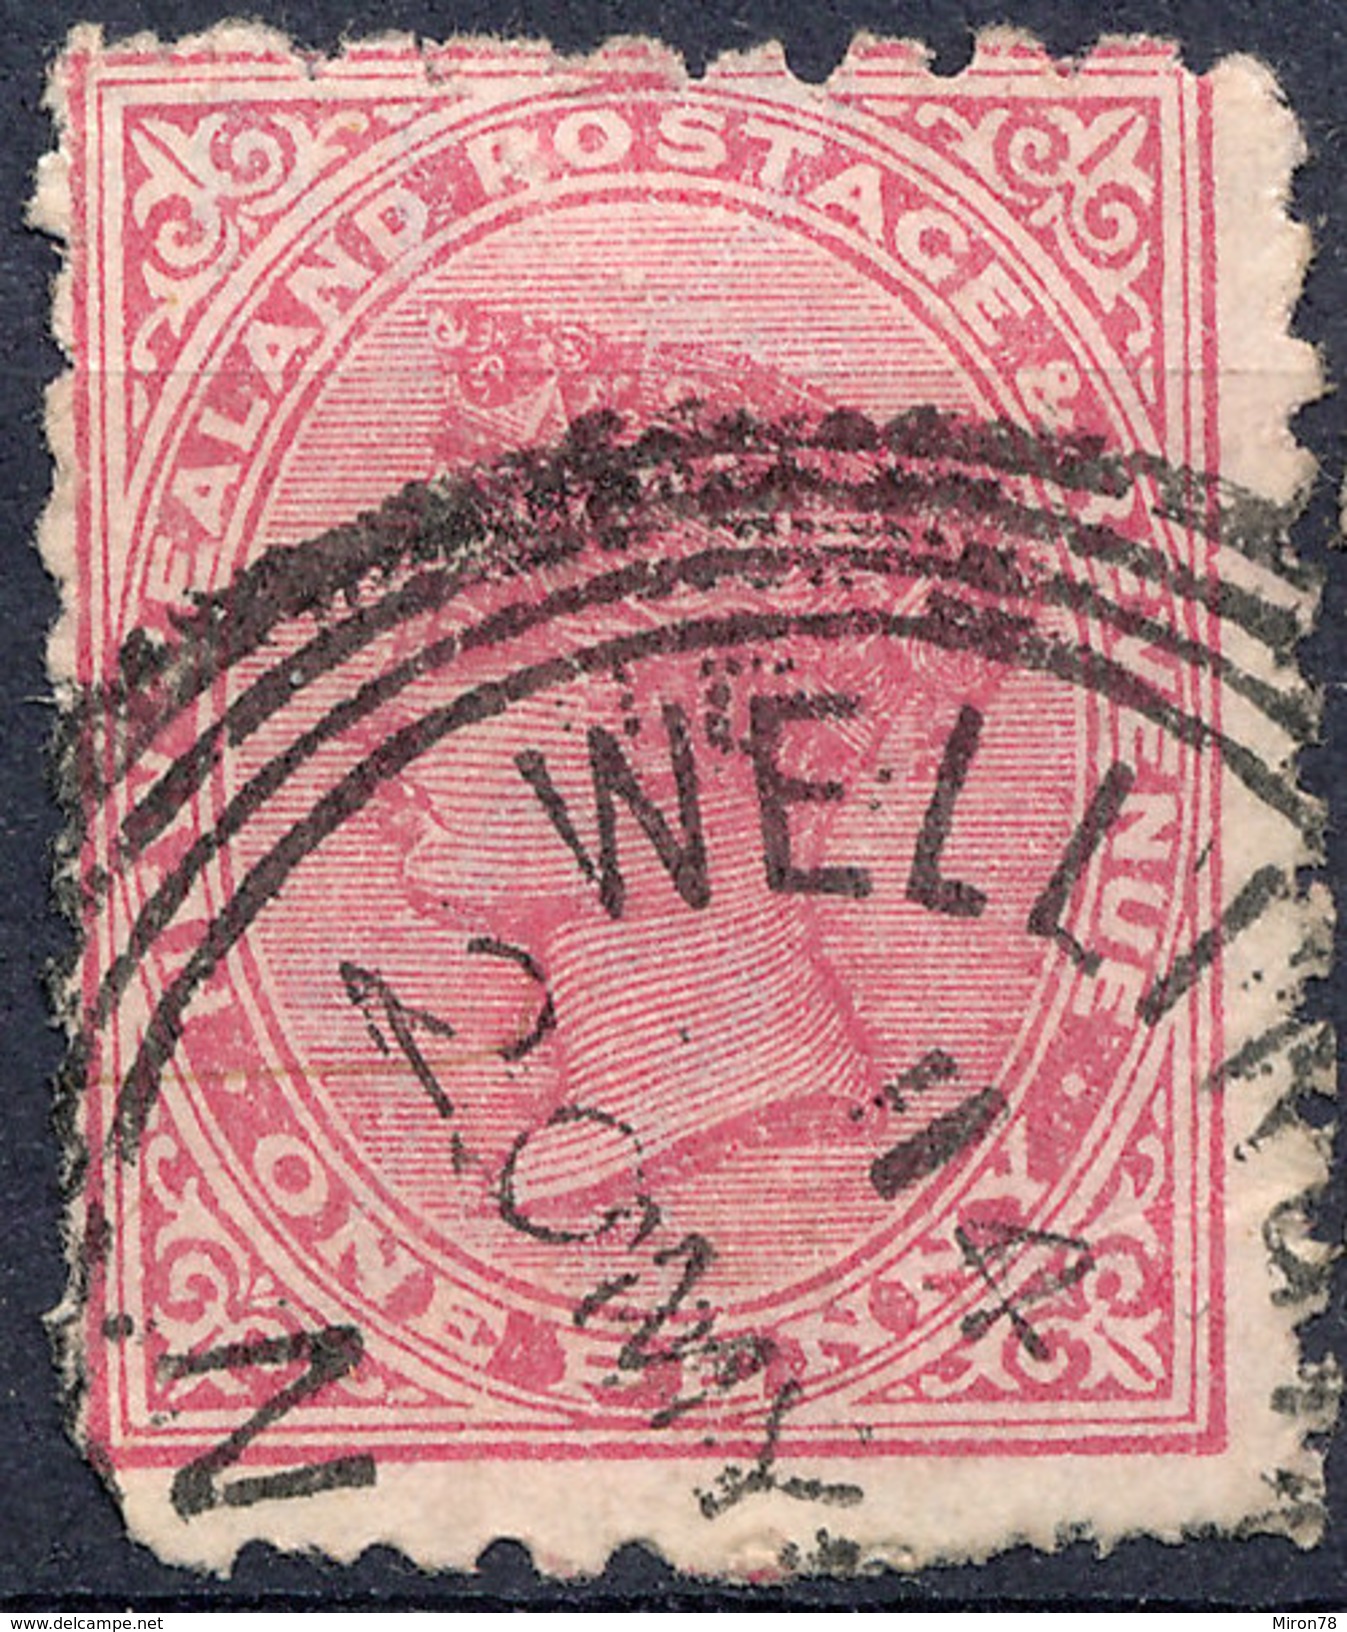 Stamp   Used Lot#28 - ...-1855 Vorphilatelie